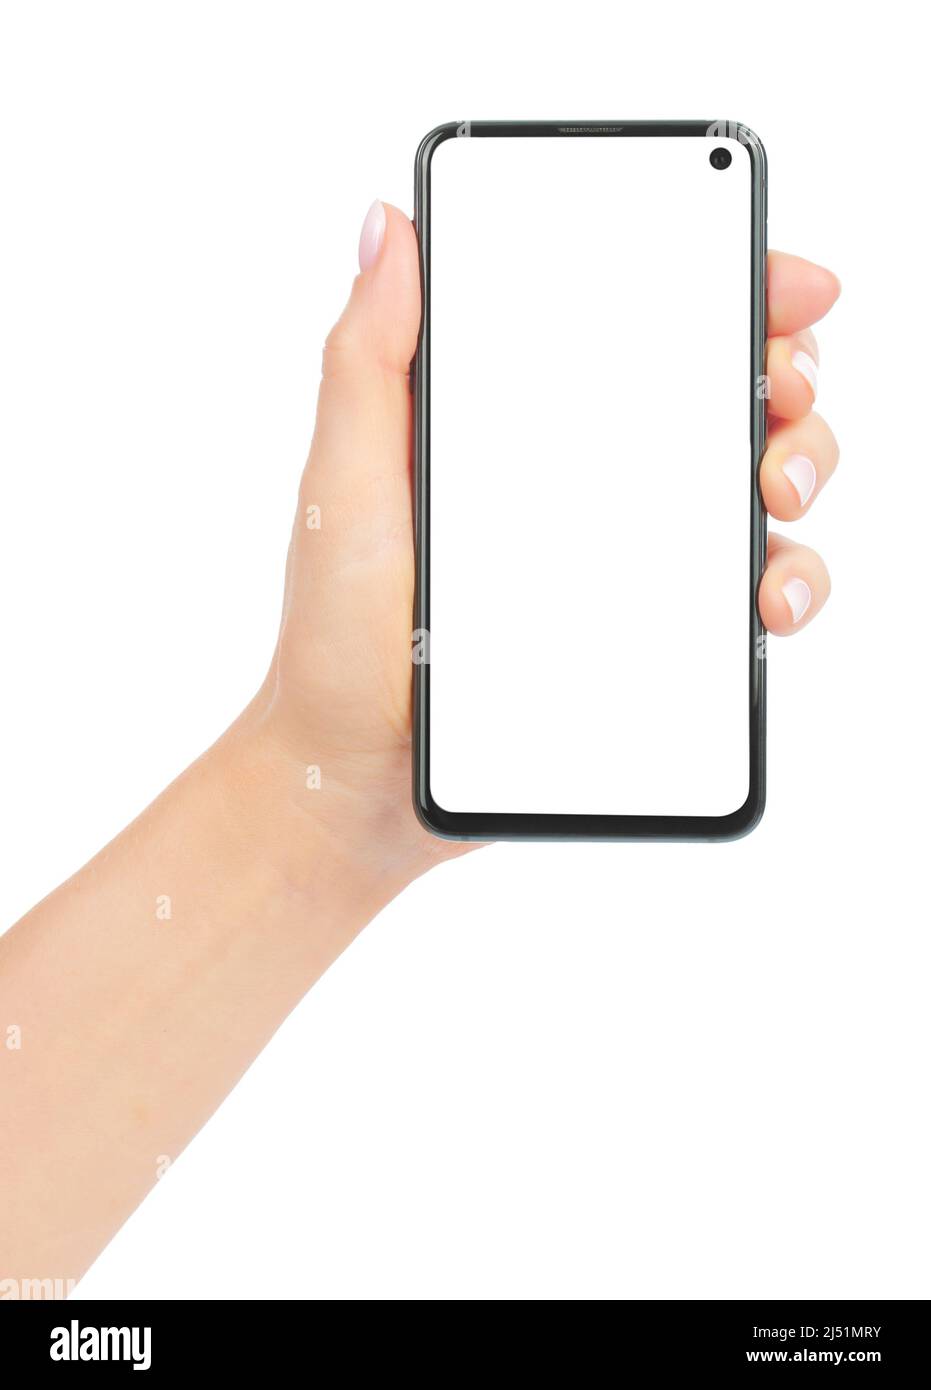 Teléfono inteligente moderno con sujeción a mano, aislado sobre primer plano de fondo blanco Foto de stock